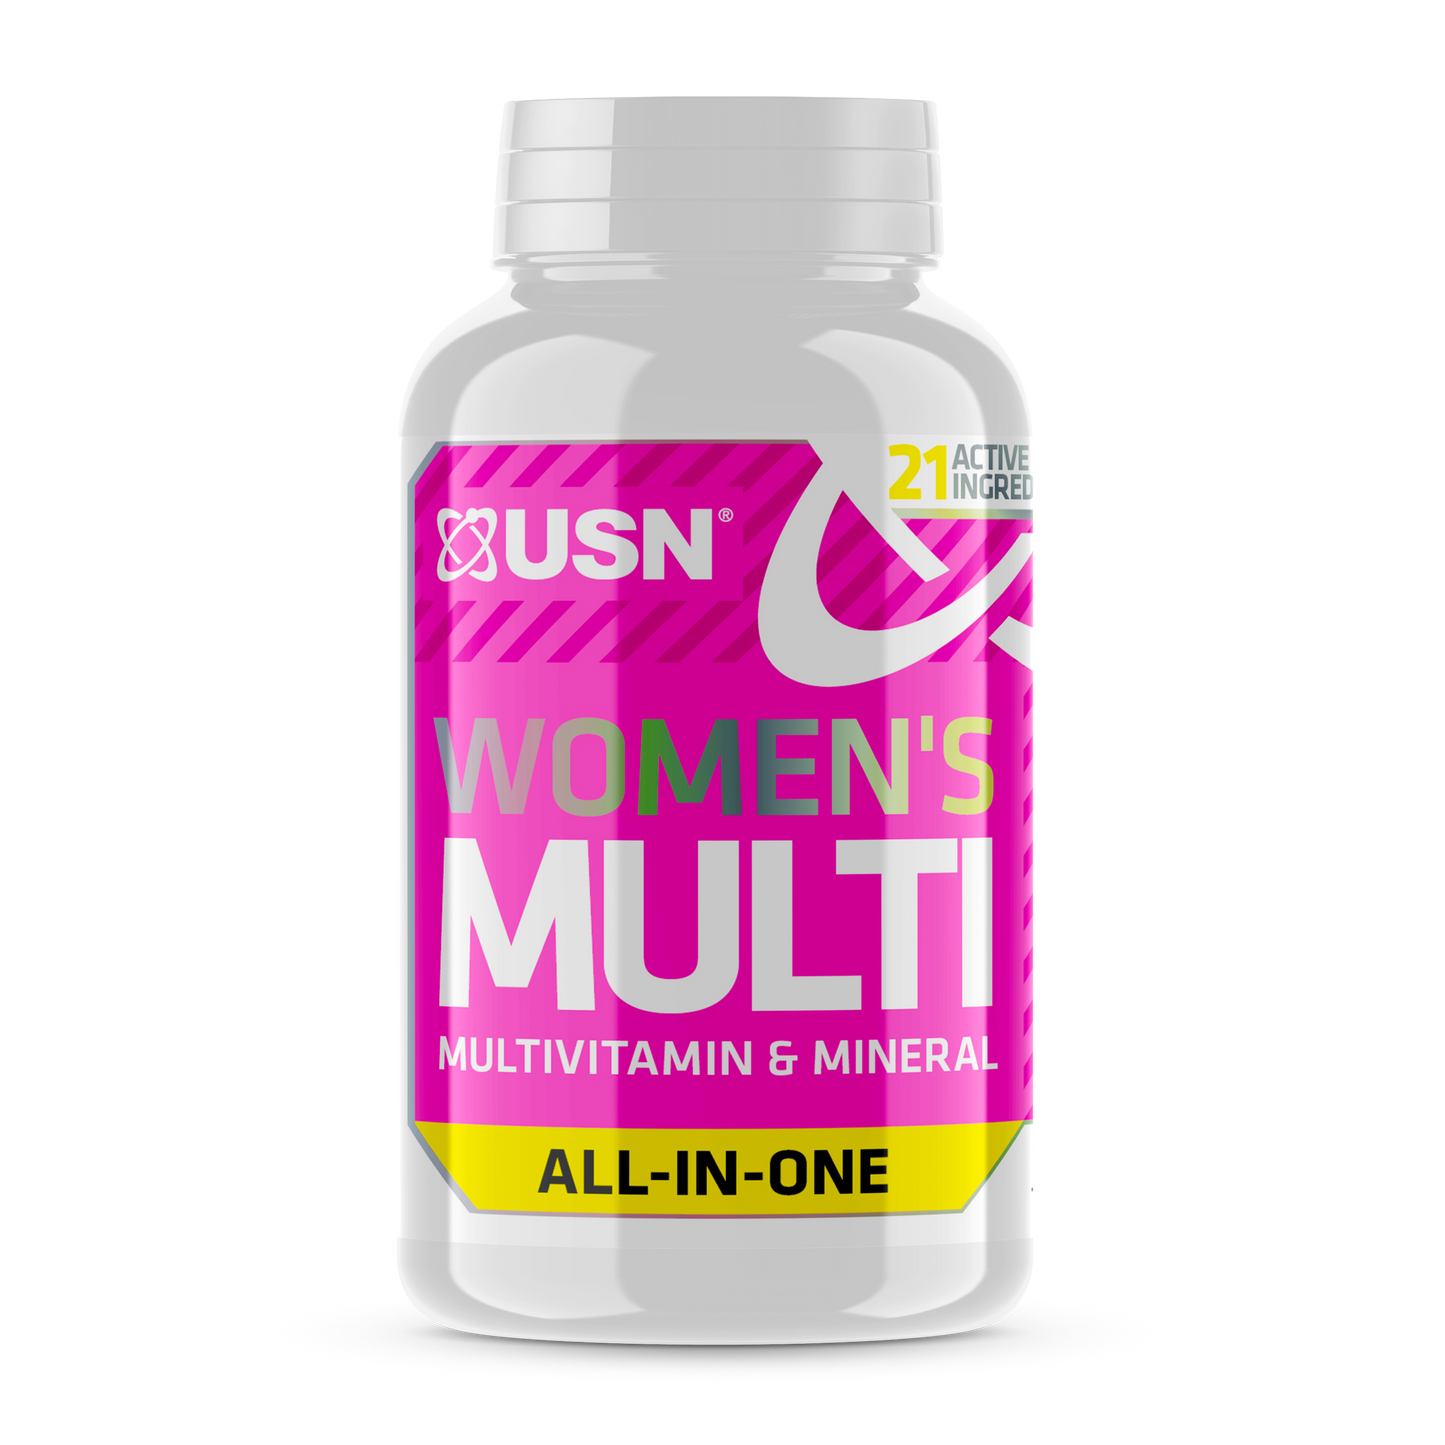 Multivitamins for Women